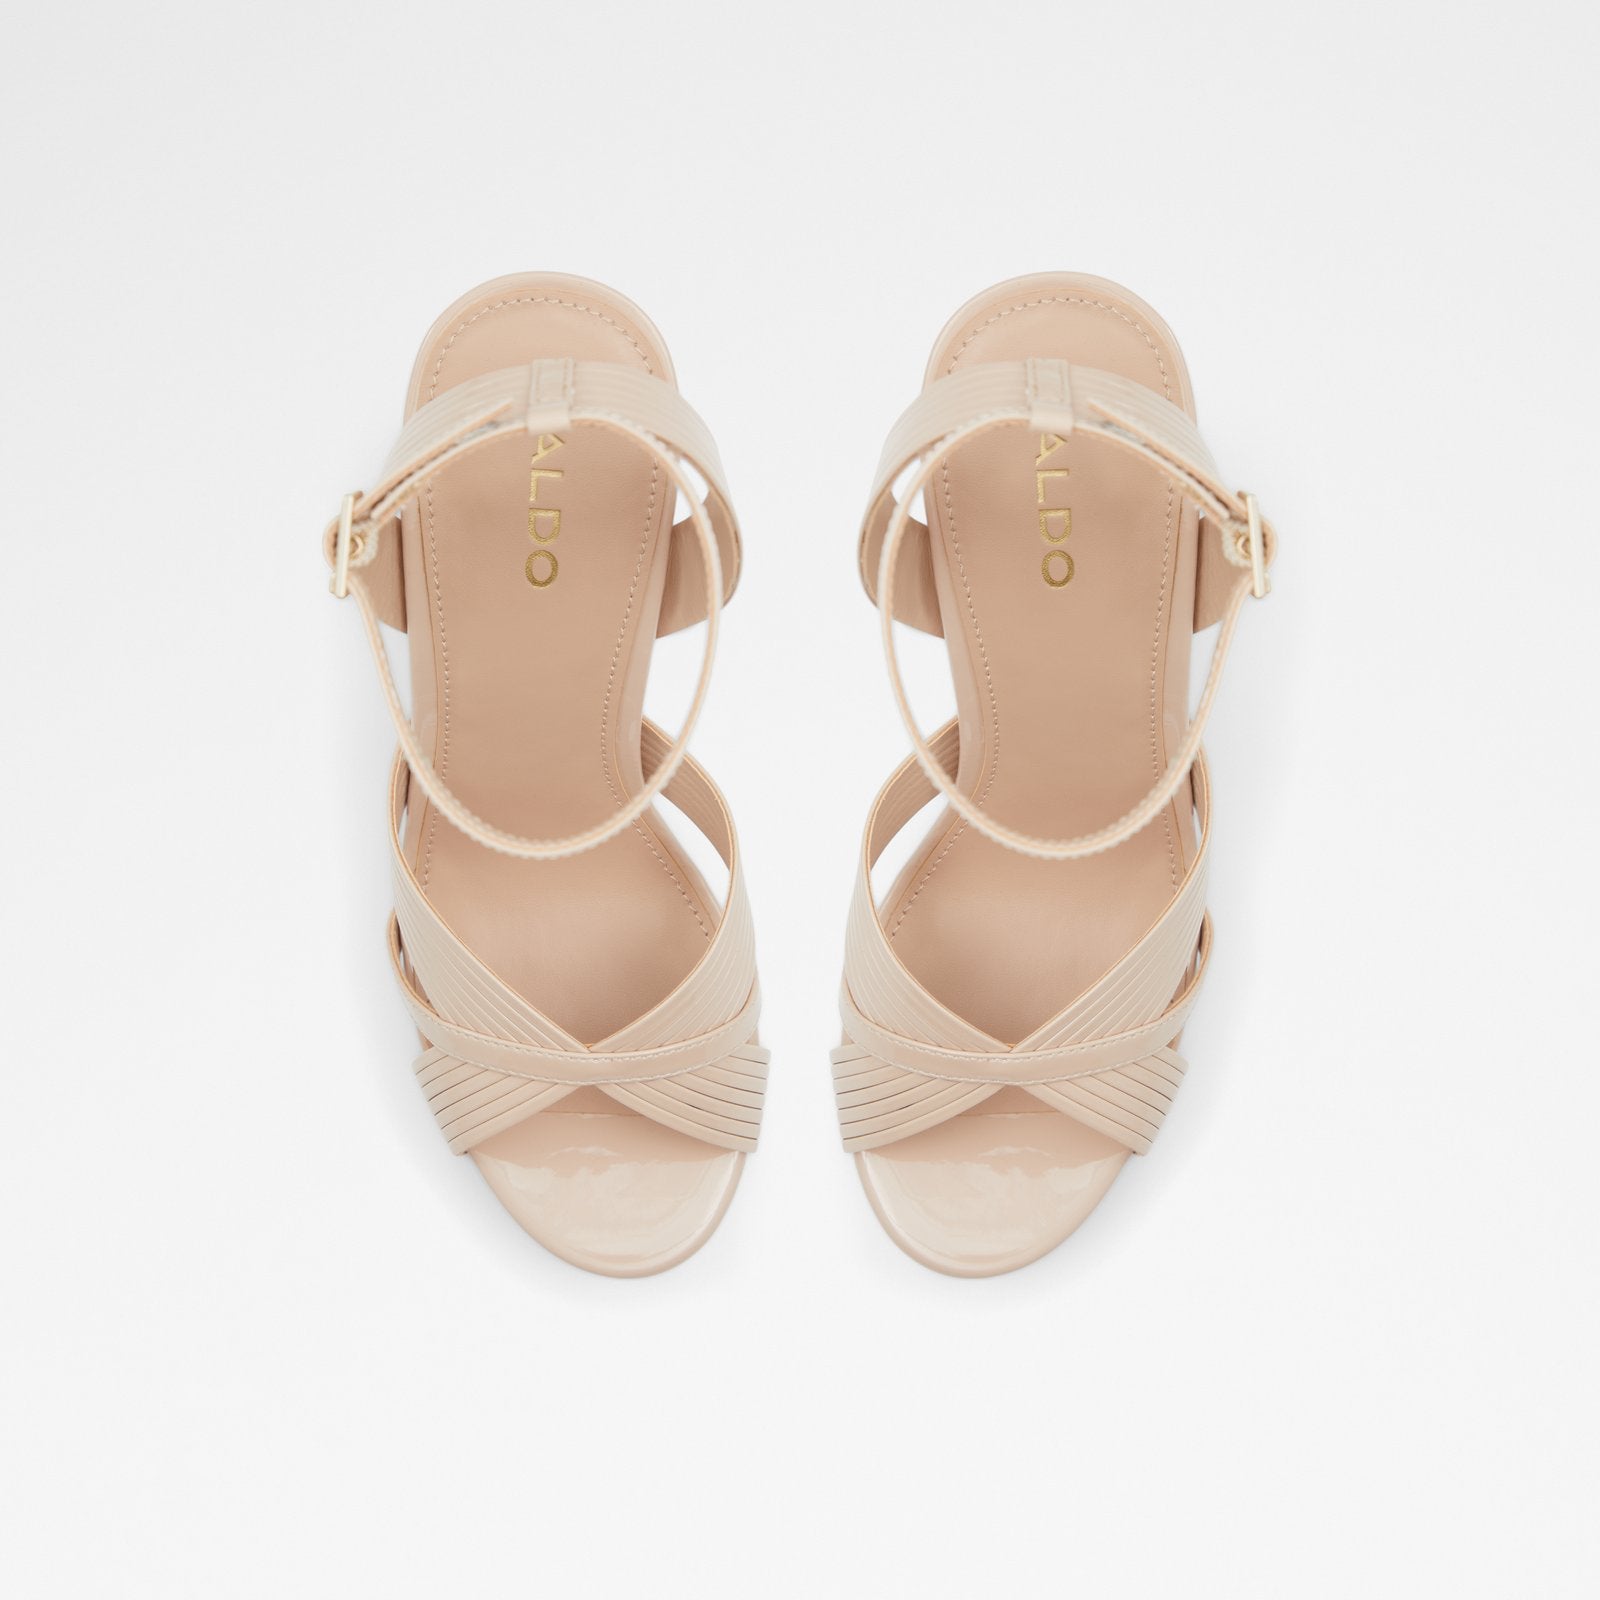 Hally / Heeled Sandals Women Shoes - Light Beige - ALDO KSA